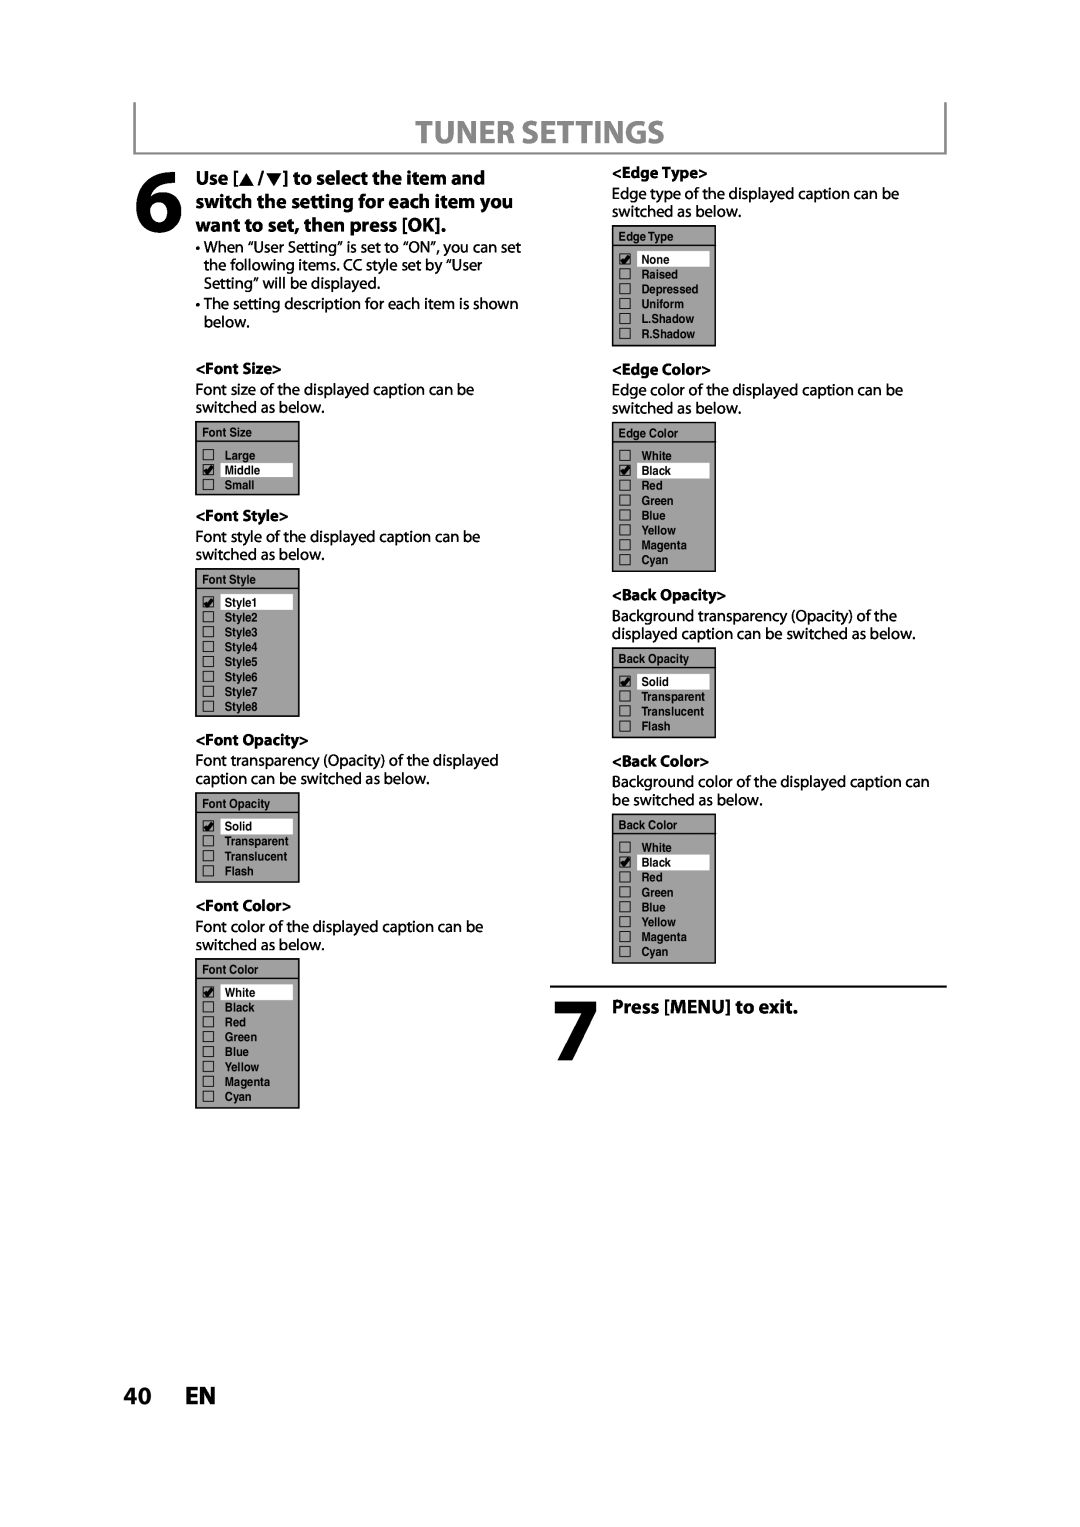 Magnavox MDR533H 40 EN, Tuner Settings, Press MENU to exit, Font Size, Edge Type, Edge Color, Font Style, Font Opacity 